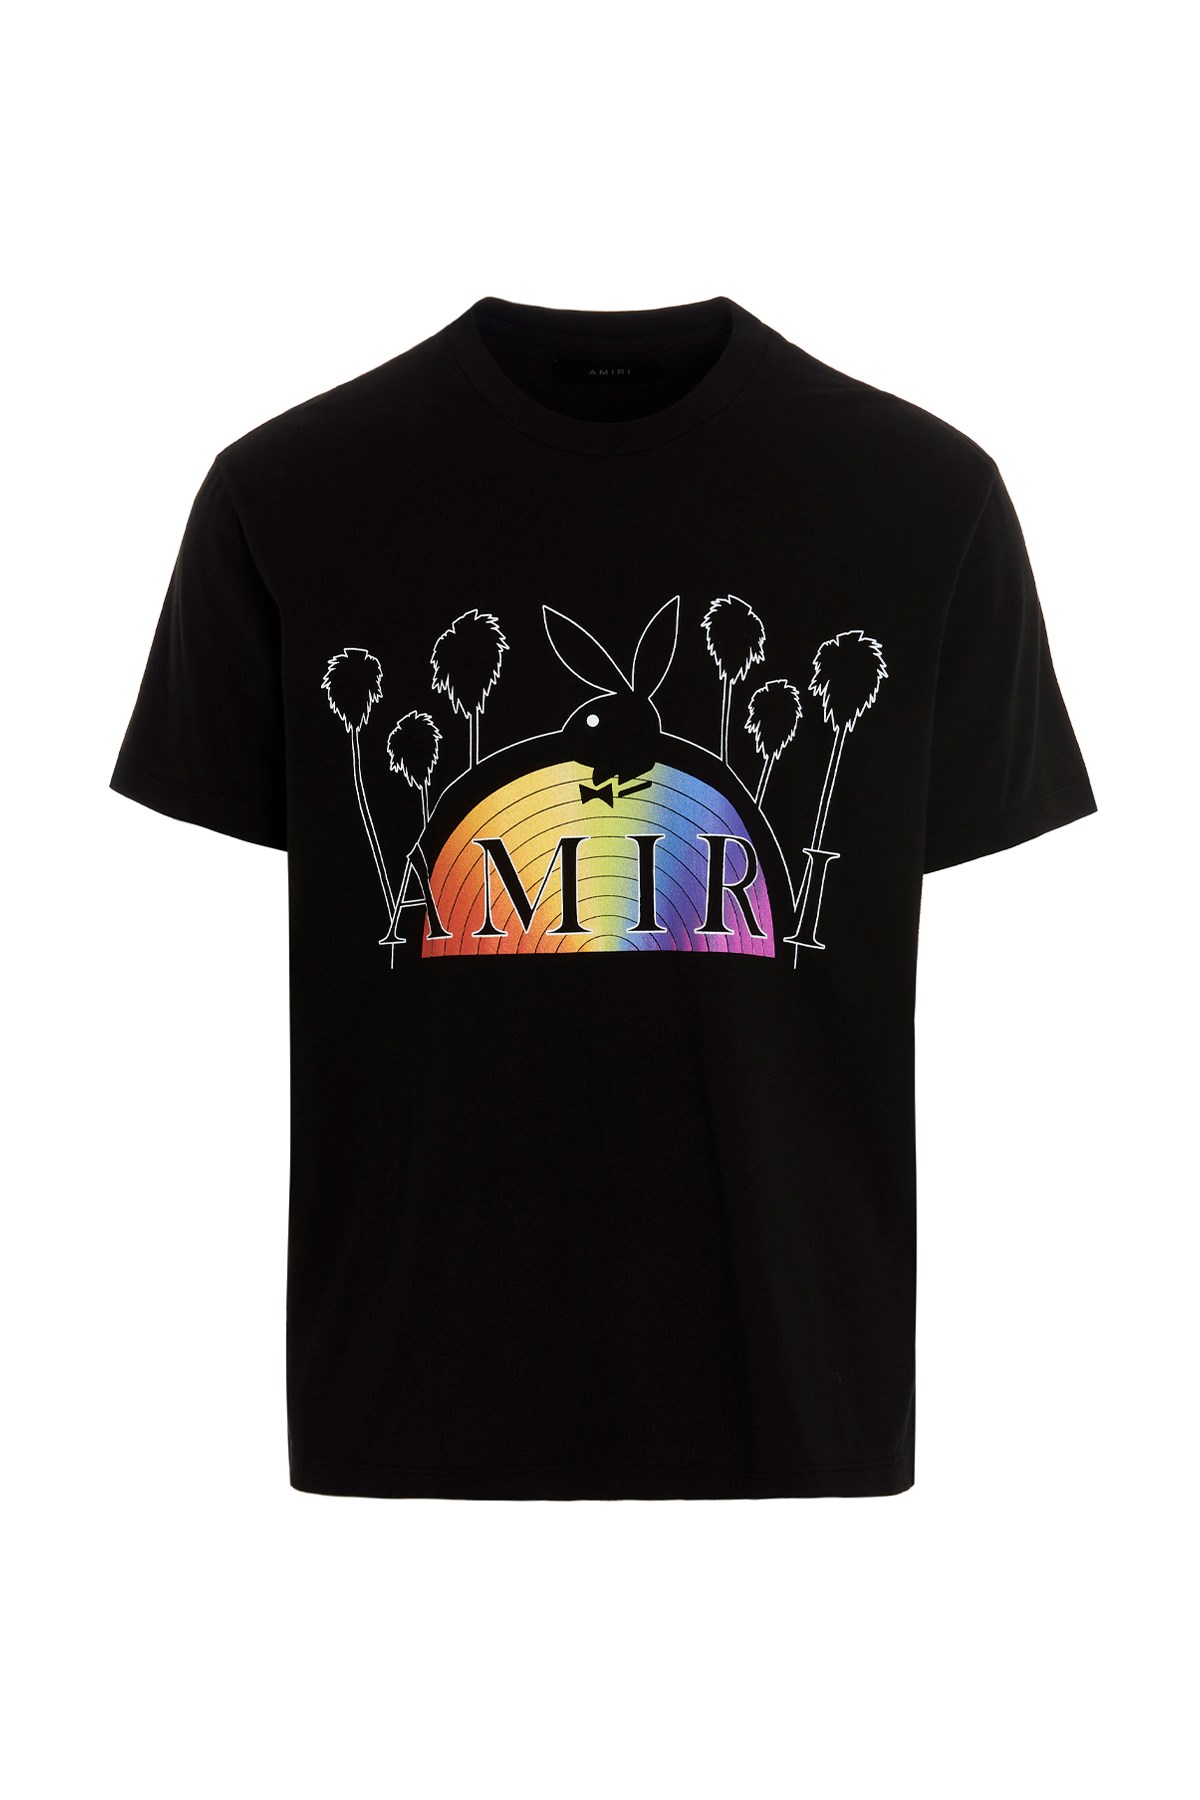 AMIRI T-Shirt 'Playboy Rainbow' Aus Einer Kollaboration Mit Playboy